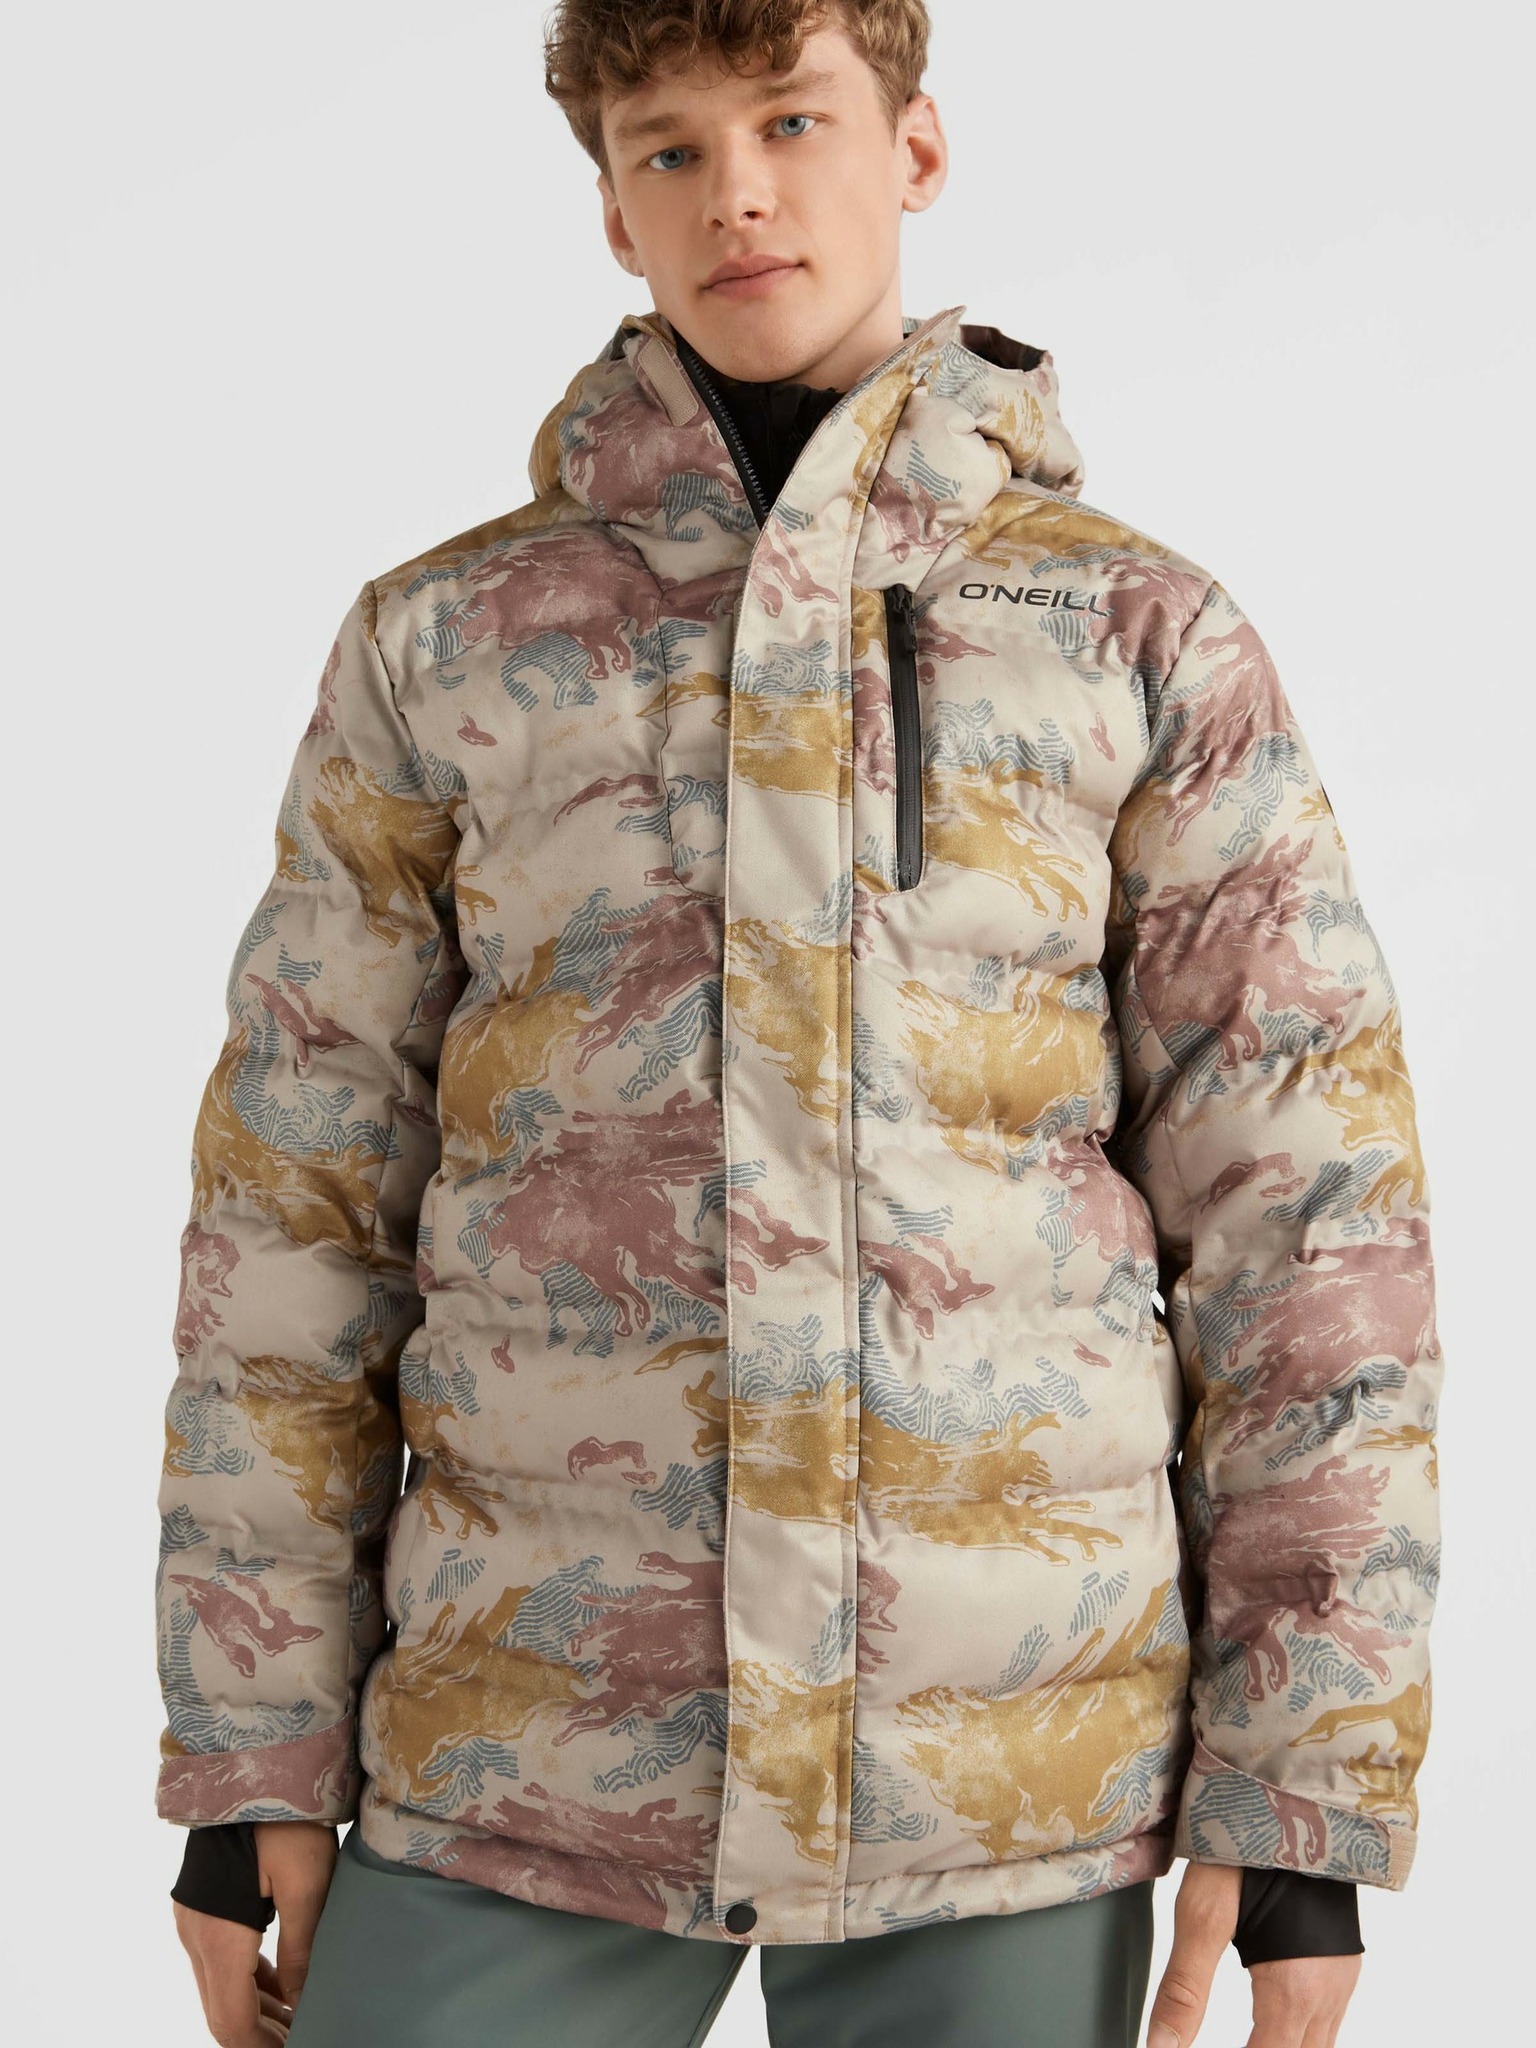 2021 Coat Check: O'NEILL Texture Jacket - Snowboarder